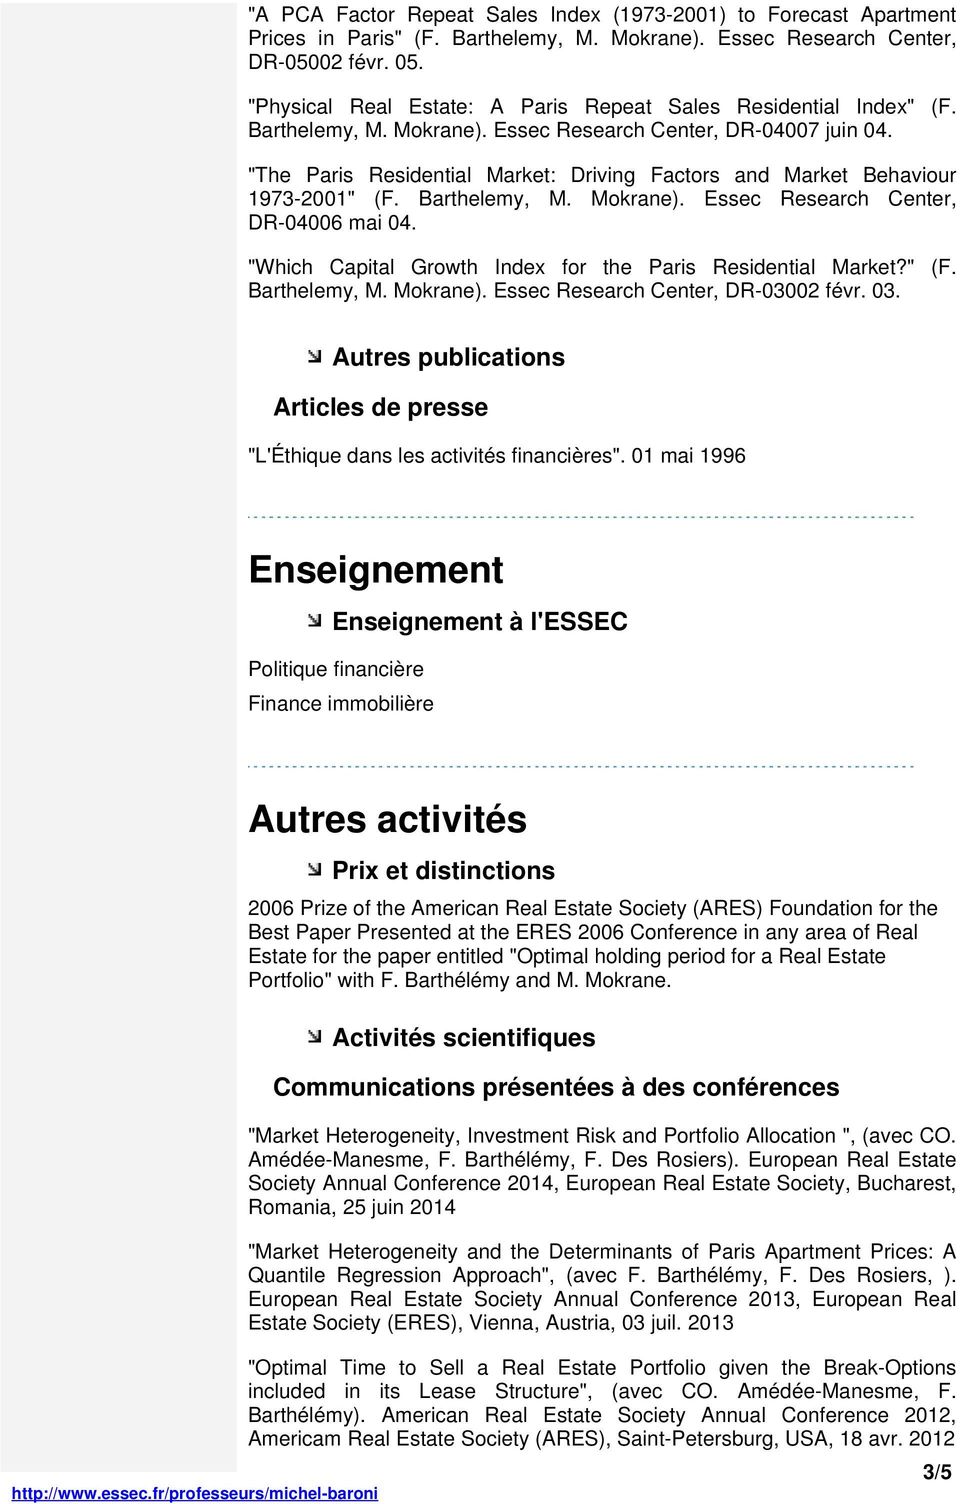 "The Paris Residential Market: Driving Factors and Market Behaviour 1973-2001" (F. Barthelemy, M. Mokrane). Essec Research Center, DR-04006 mai 04.